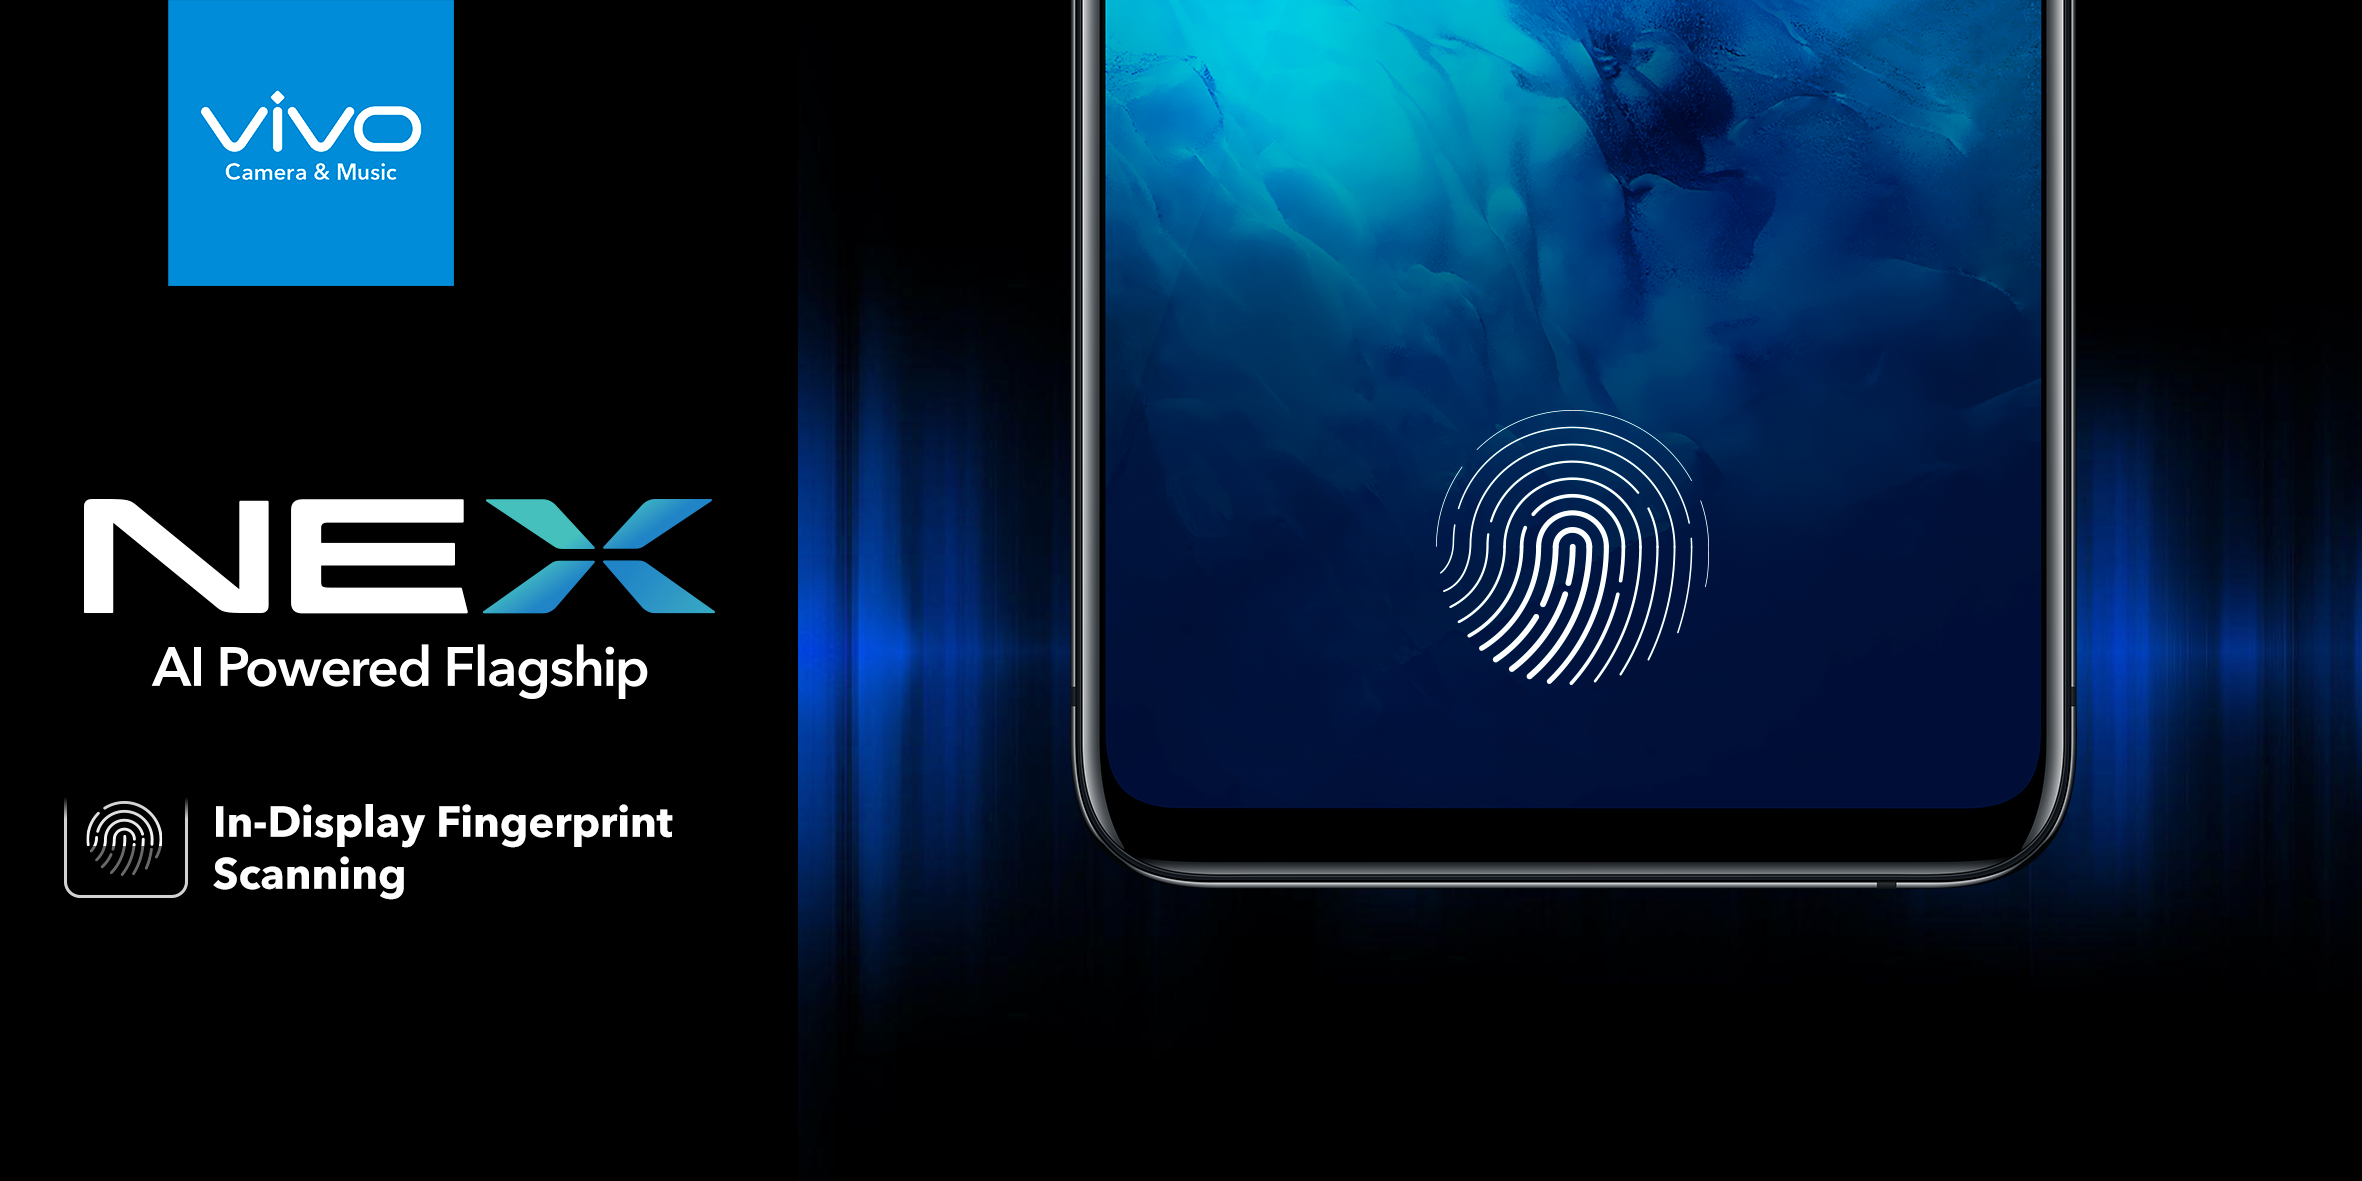 vivo NEX's in-display fingerprint sensor is apparently the 3rd generation already